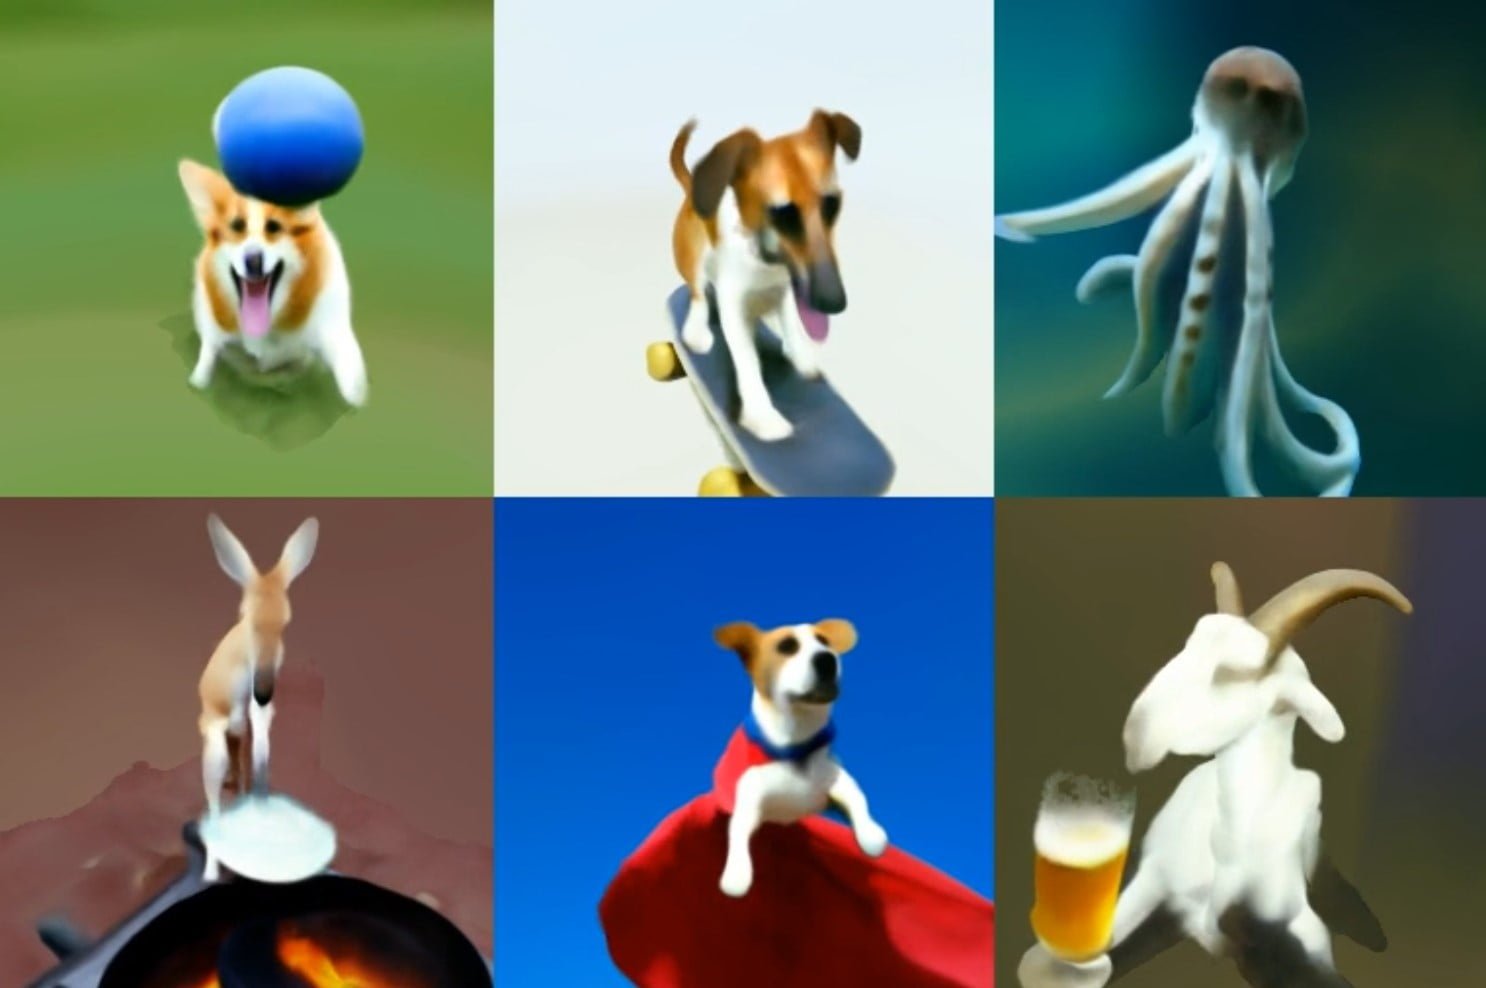 Make-a-Video3D: Meta generates 3D scenes from text